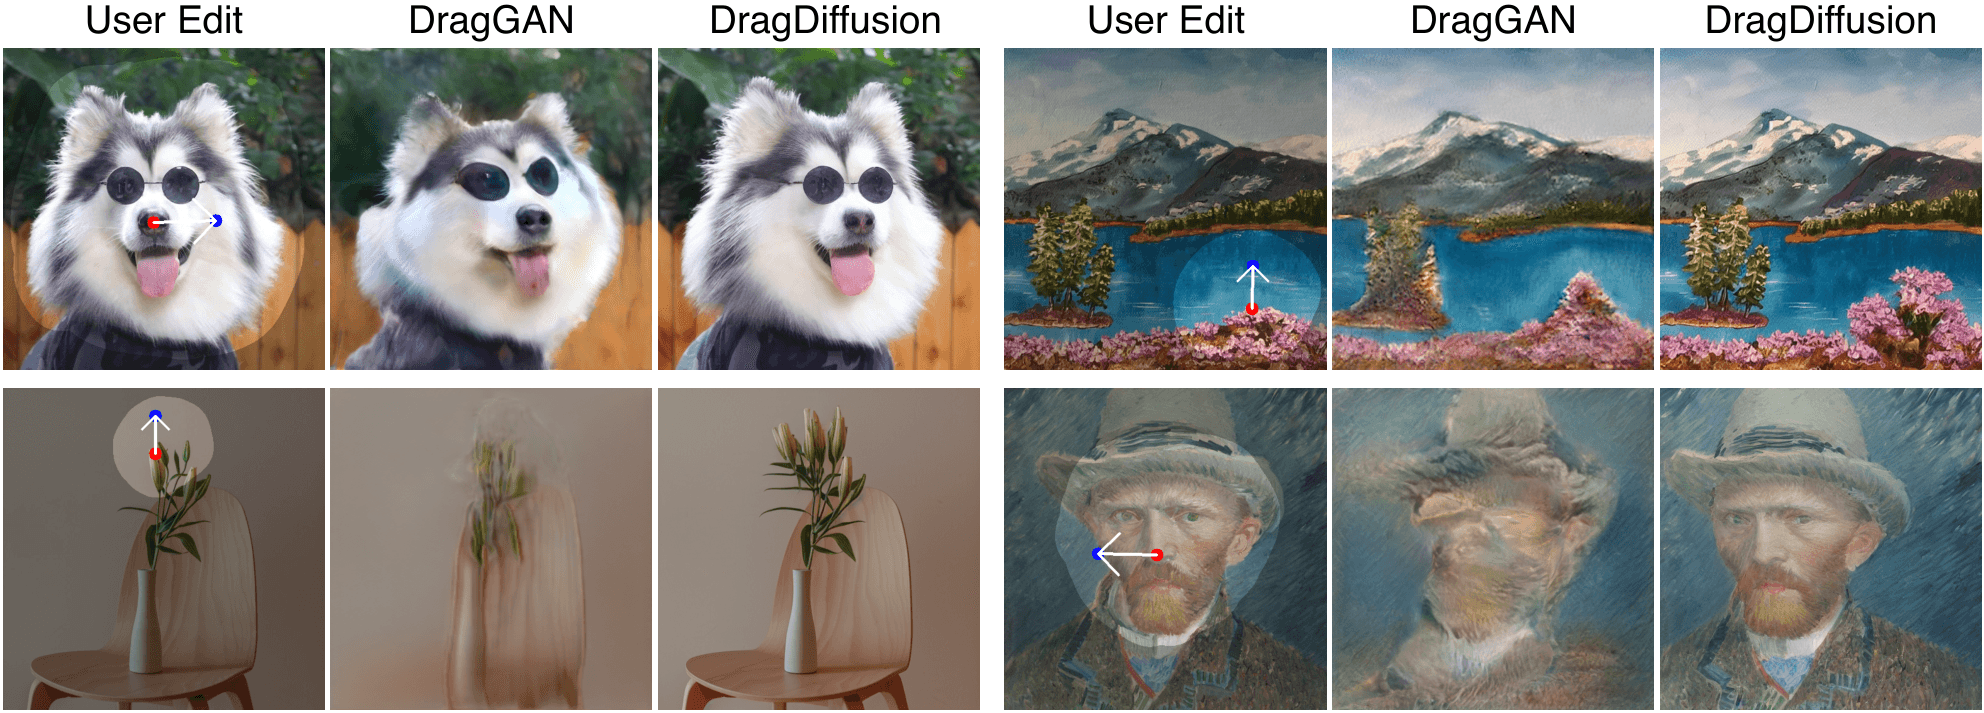 DragDiffusion: Harnessing Diffusion Models for Interactive Point-based Image Editing